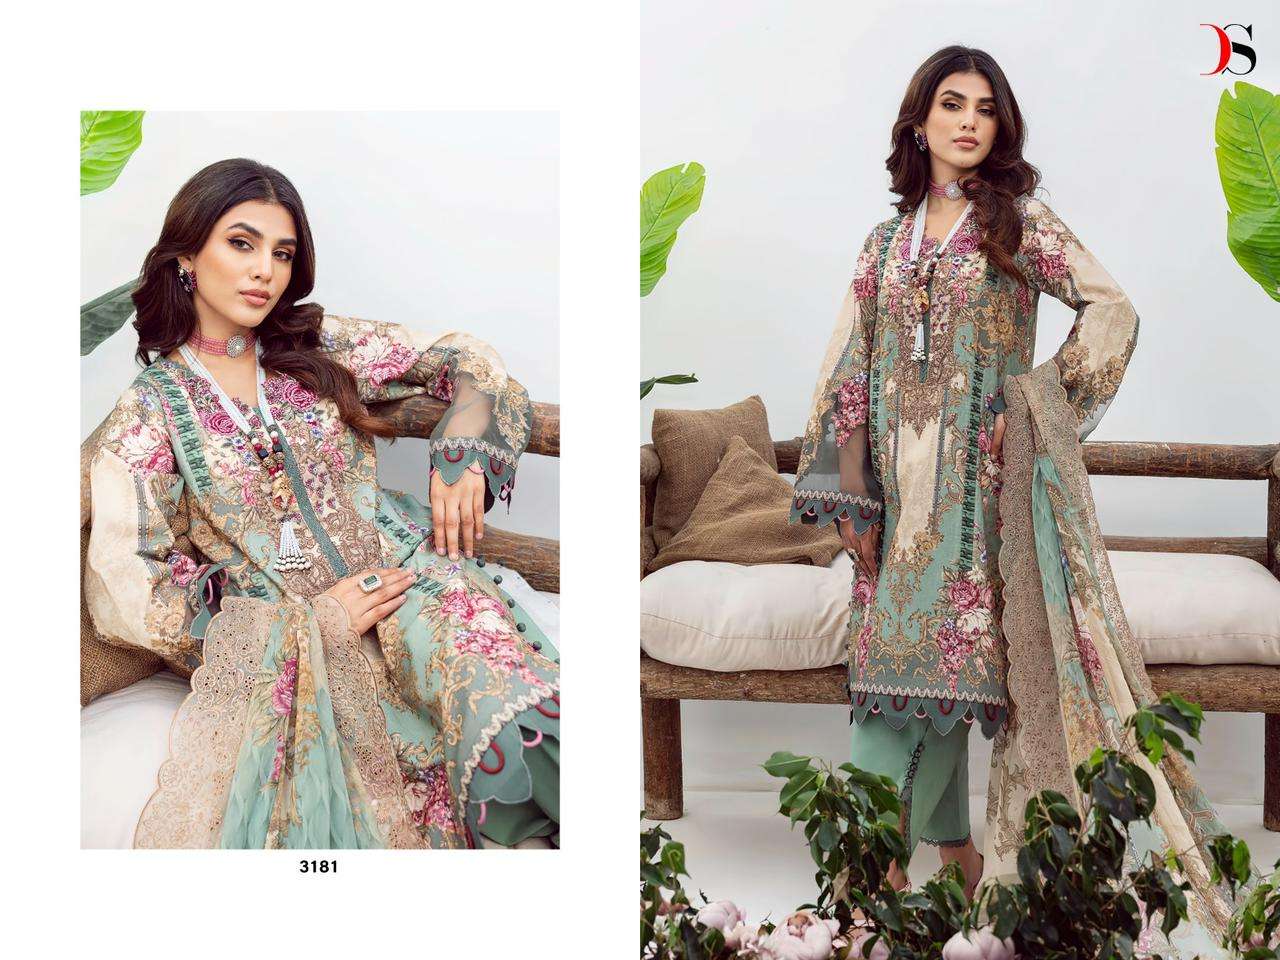 deepsy suits jade needle wonder remix stylish designer pakistani salwar suits design 2023